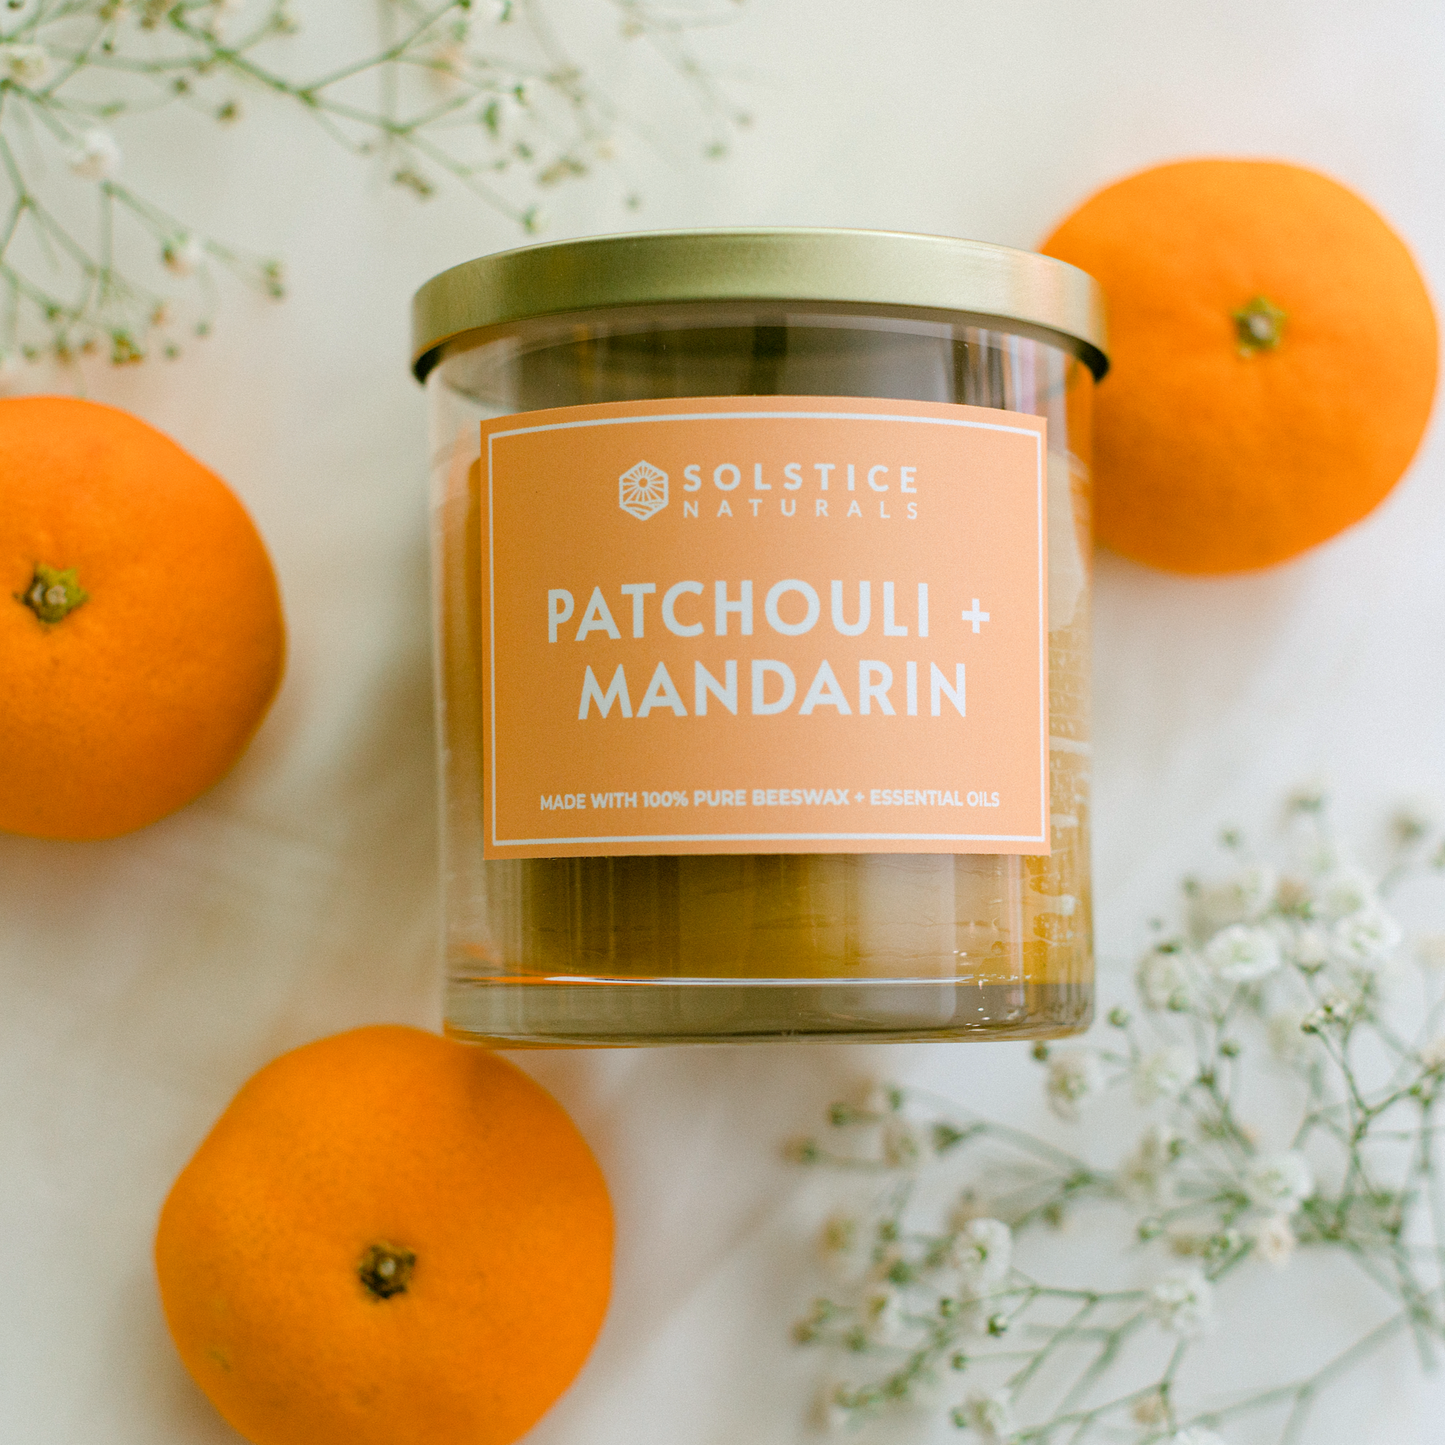 Patchouli + Mandarin